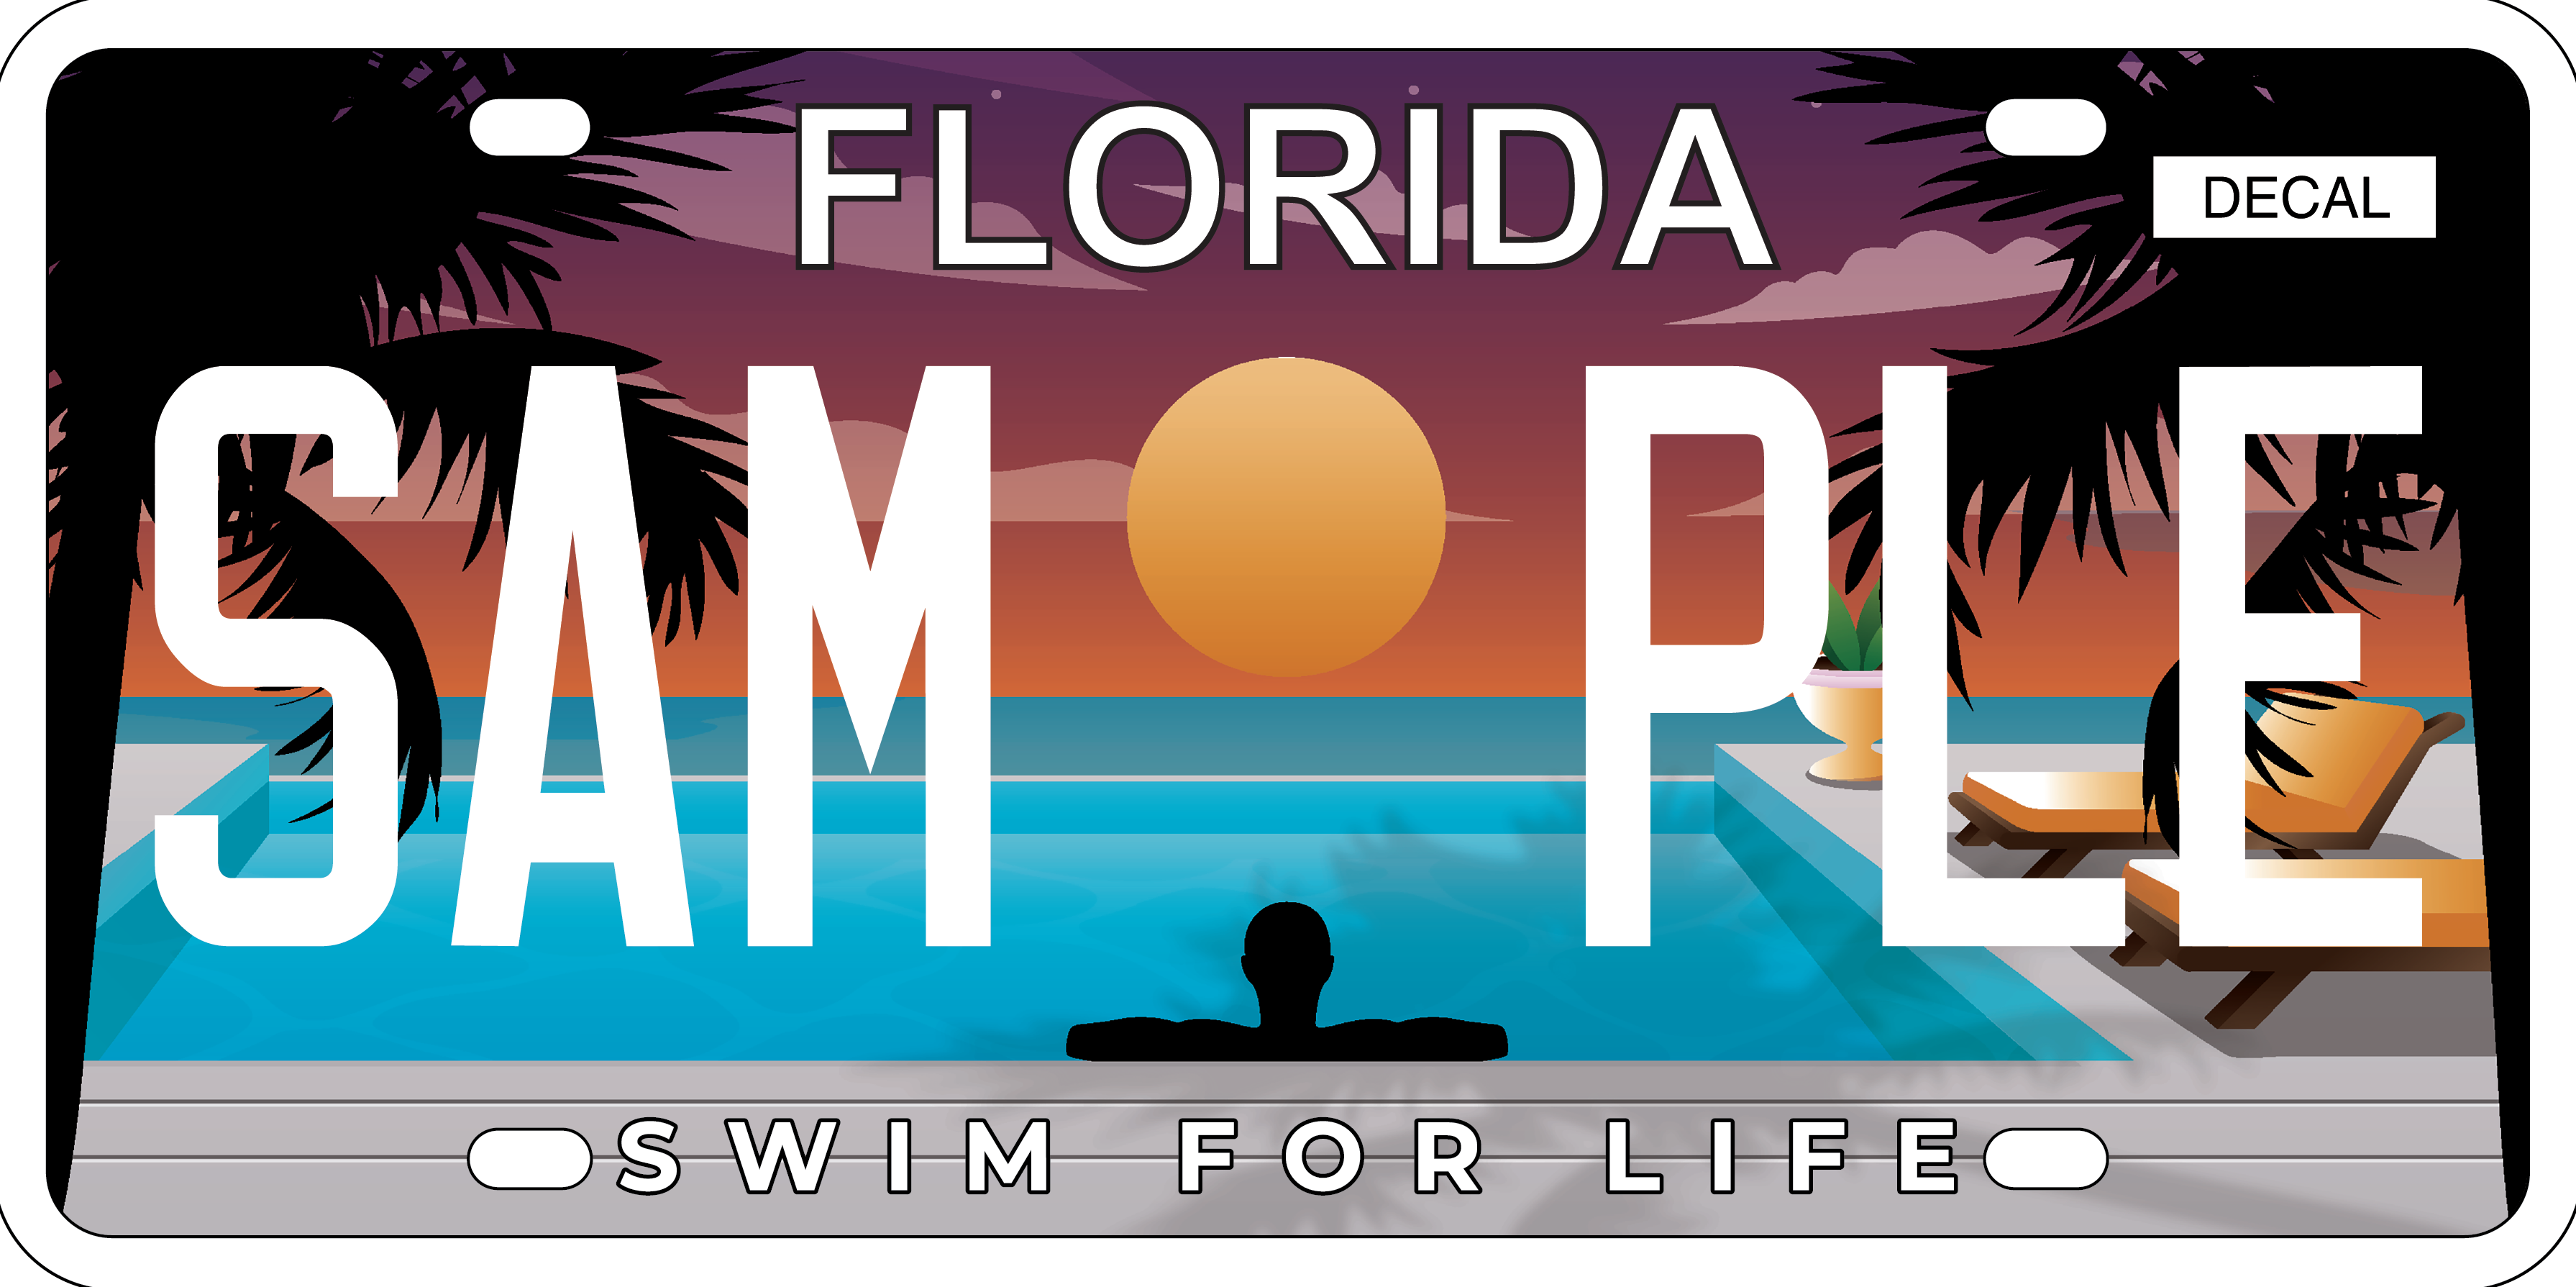 Florida Swims Foundation